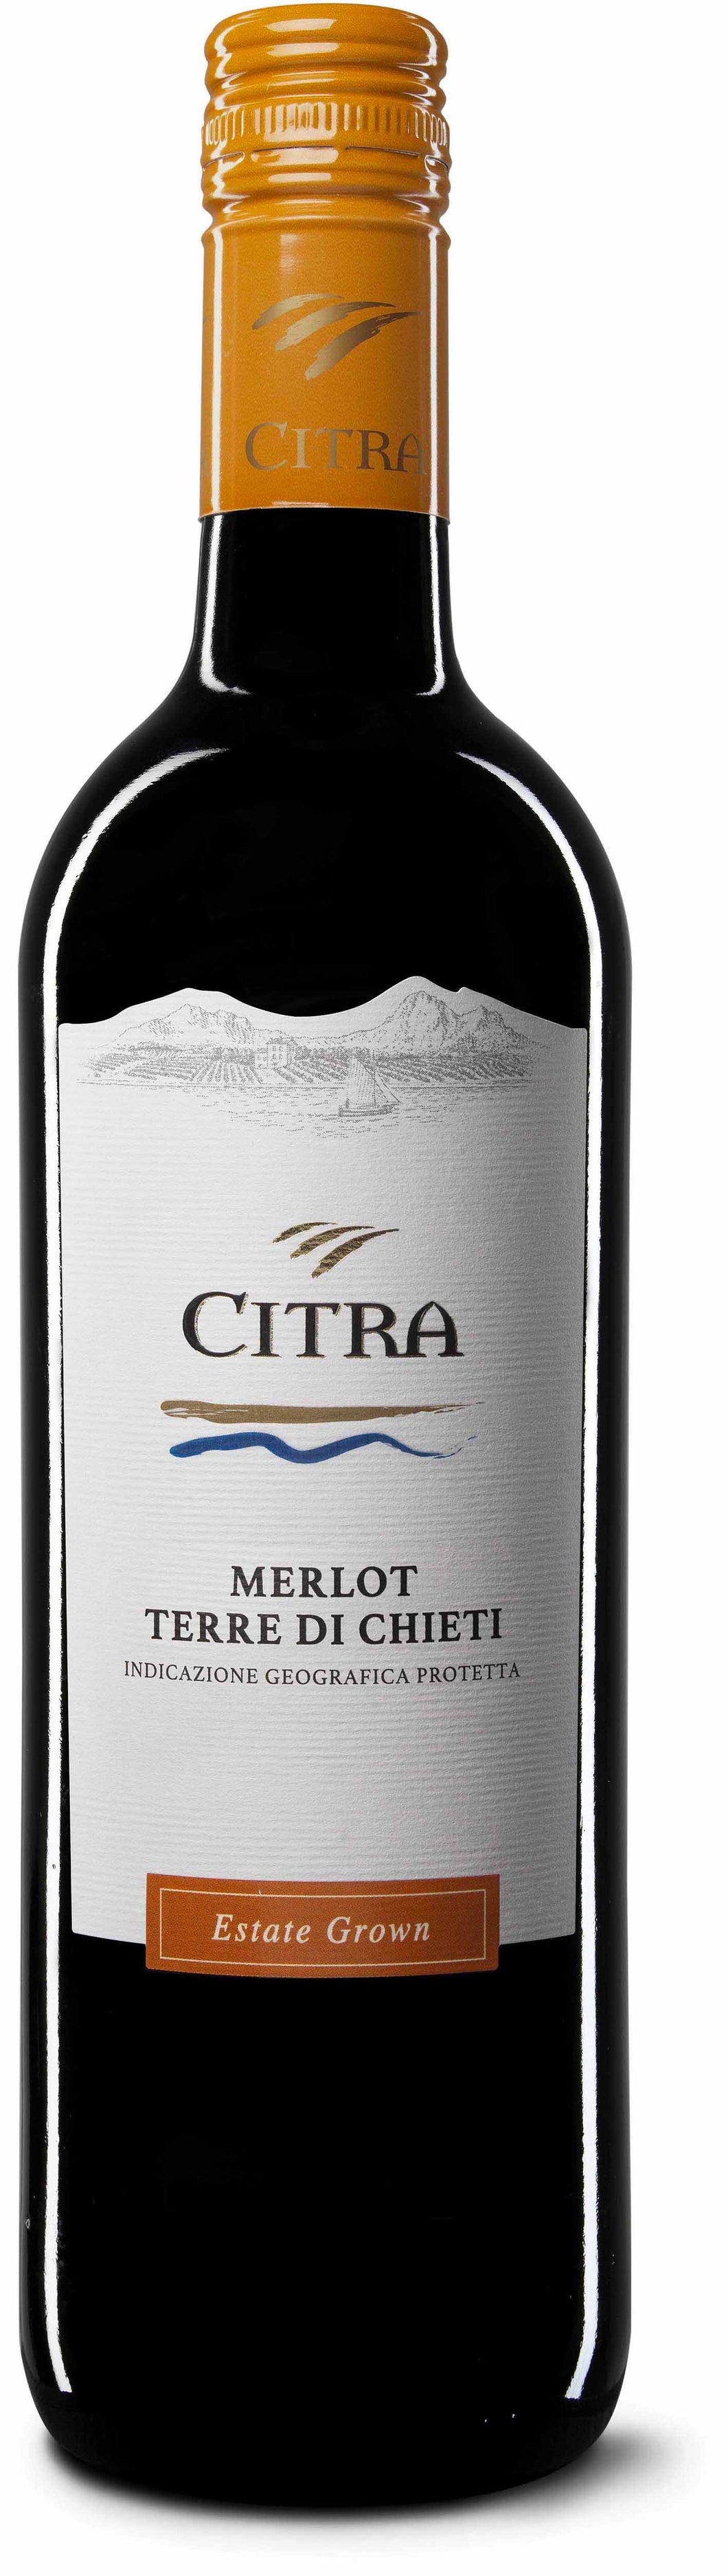 Citra Merlot Terre di Chieti 750ml